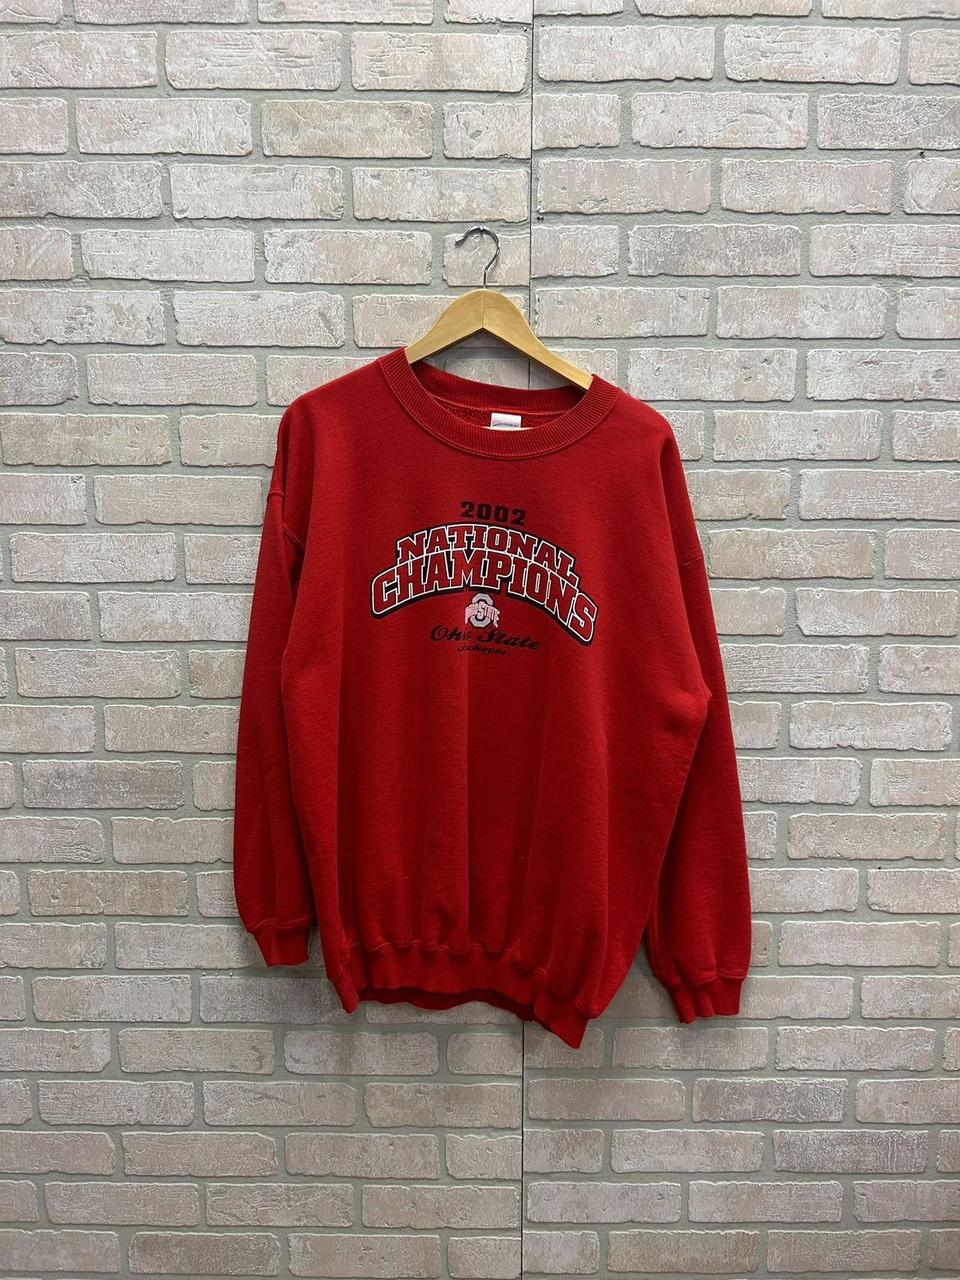 2002 Ohio state national champions sweatshirt Size L - Depop